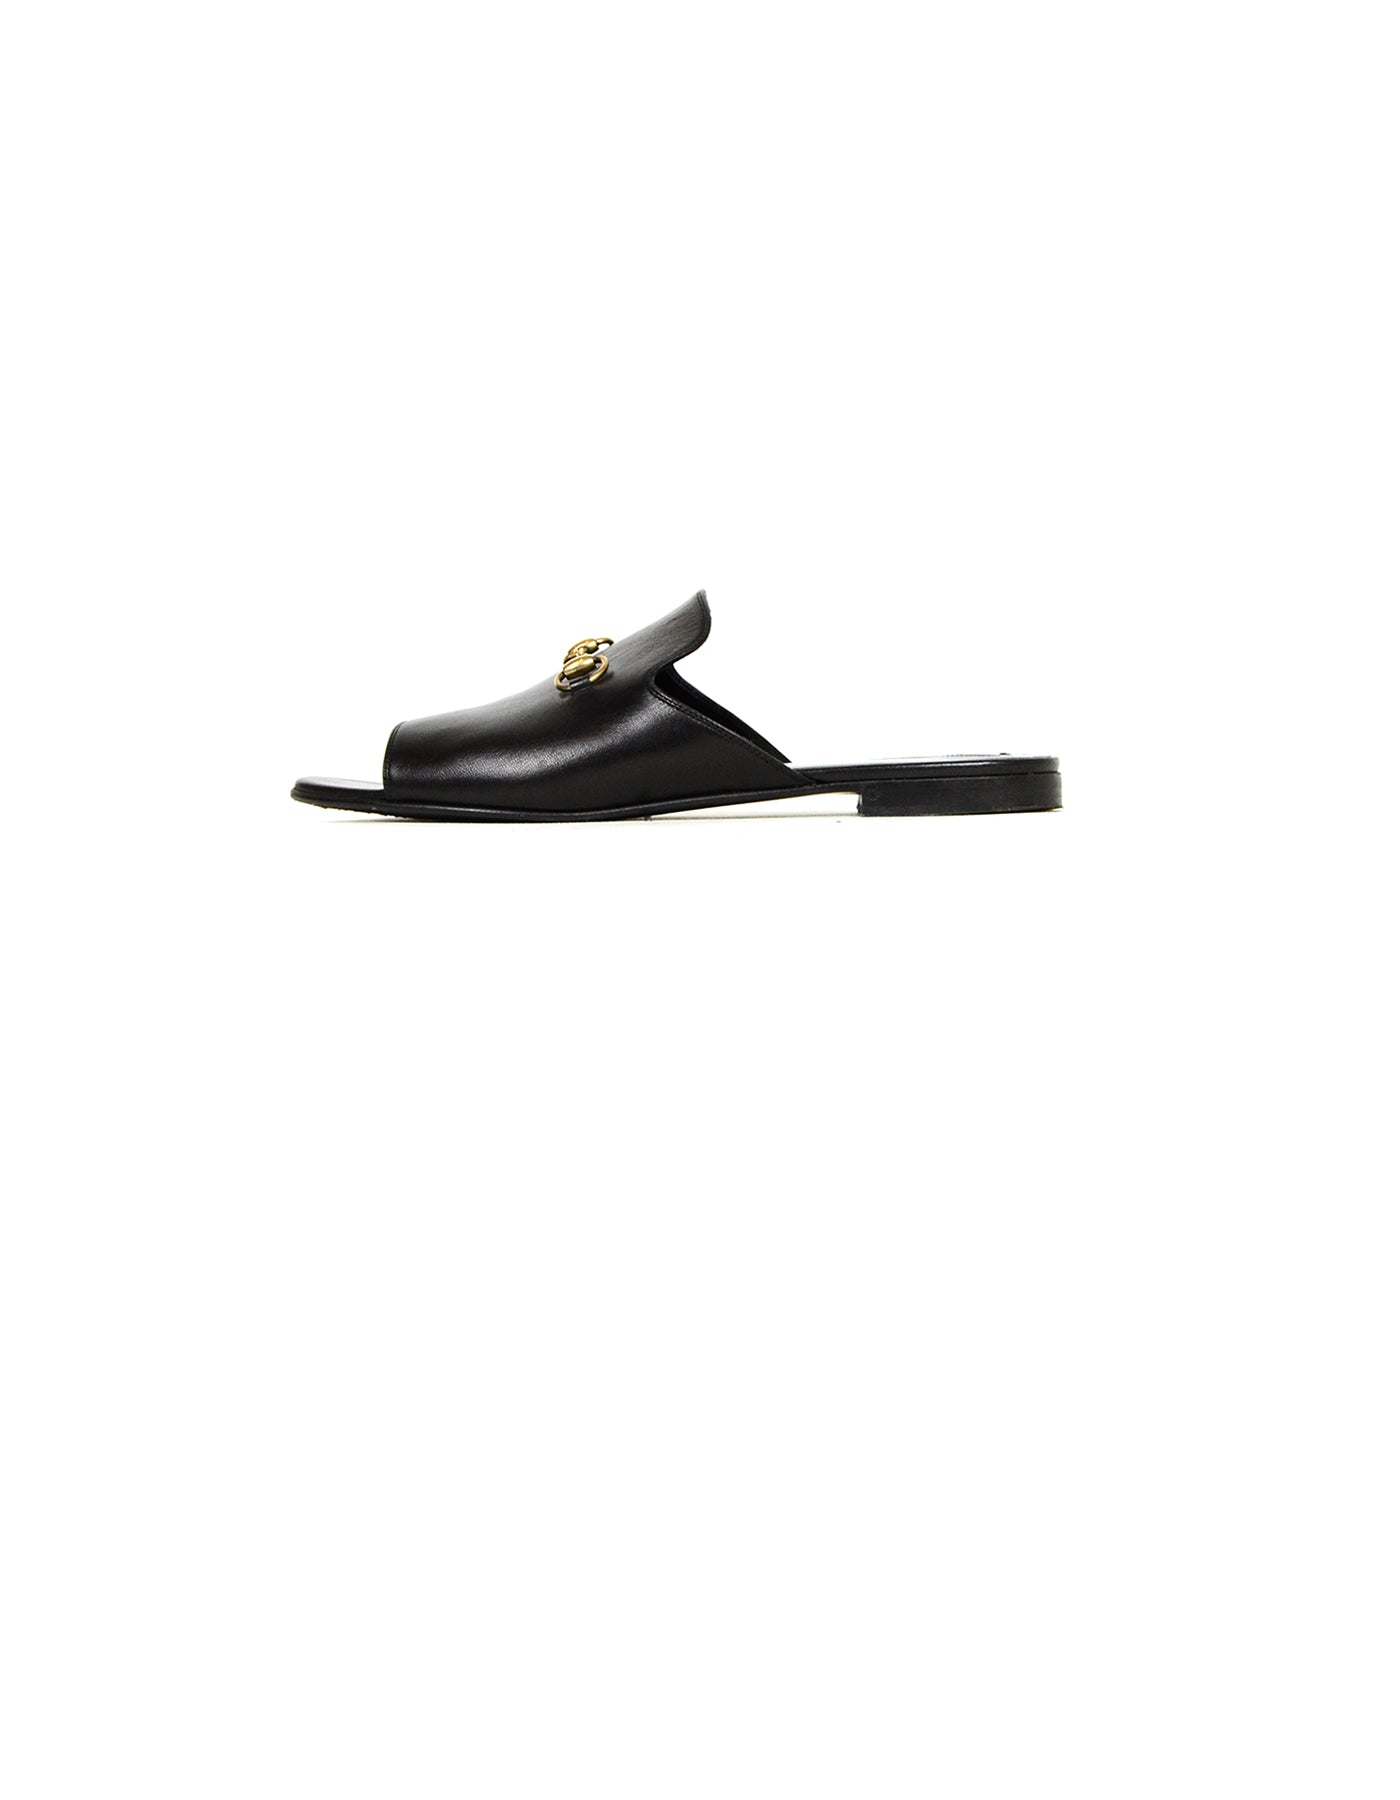 Gucci Black Leather Horsebit Peep-Toe Slides sz 39.5